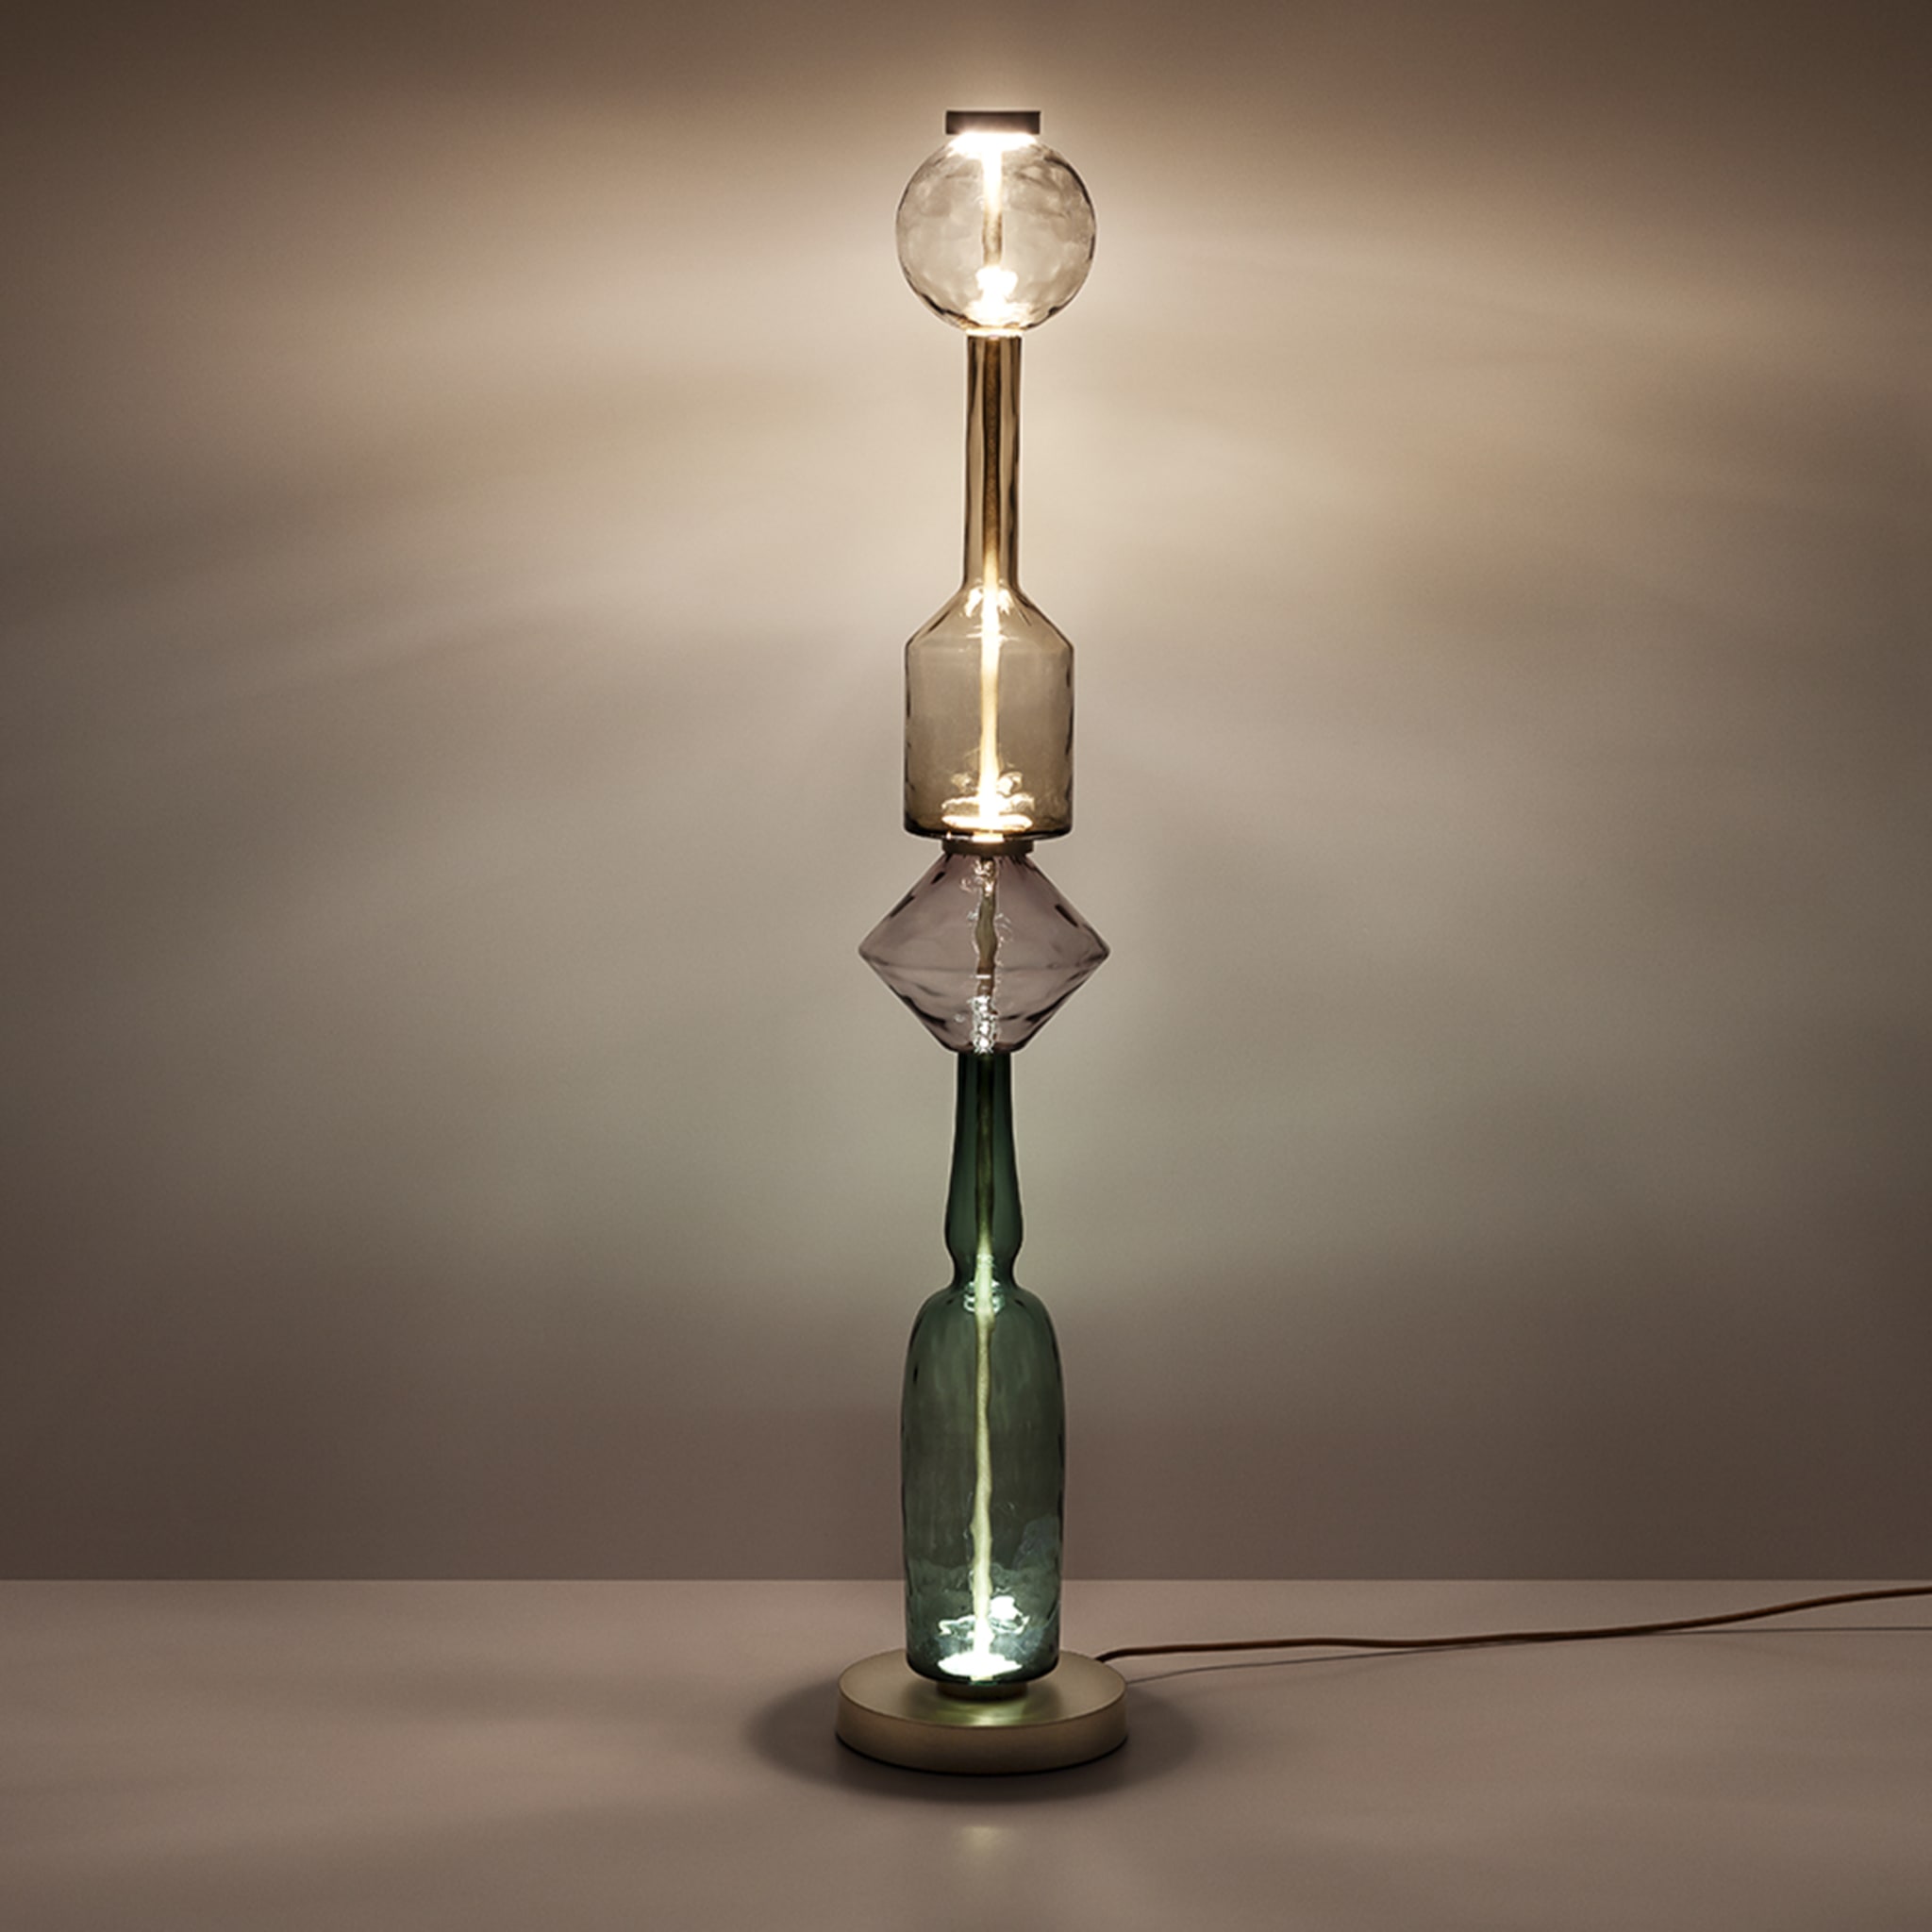 Morandi Icone Luminose Floor Lamp #1 - Alternative view 1